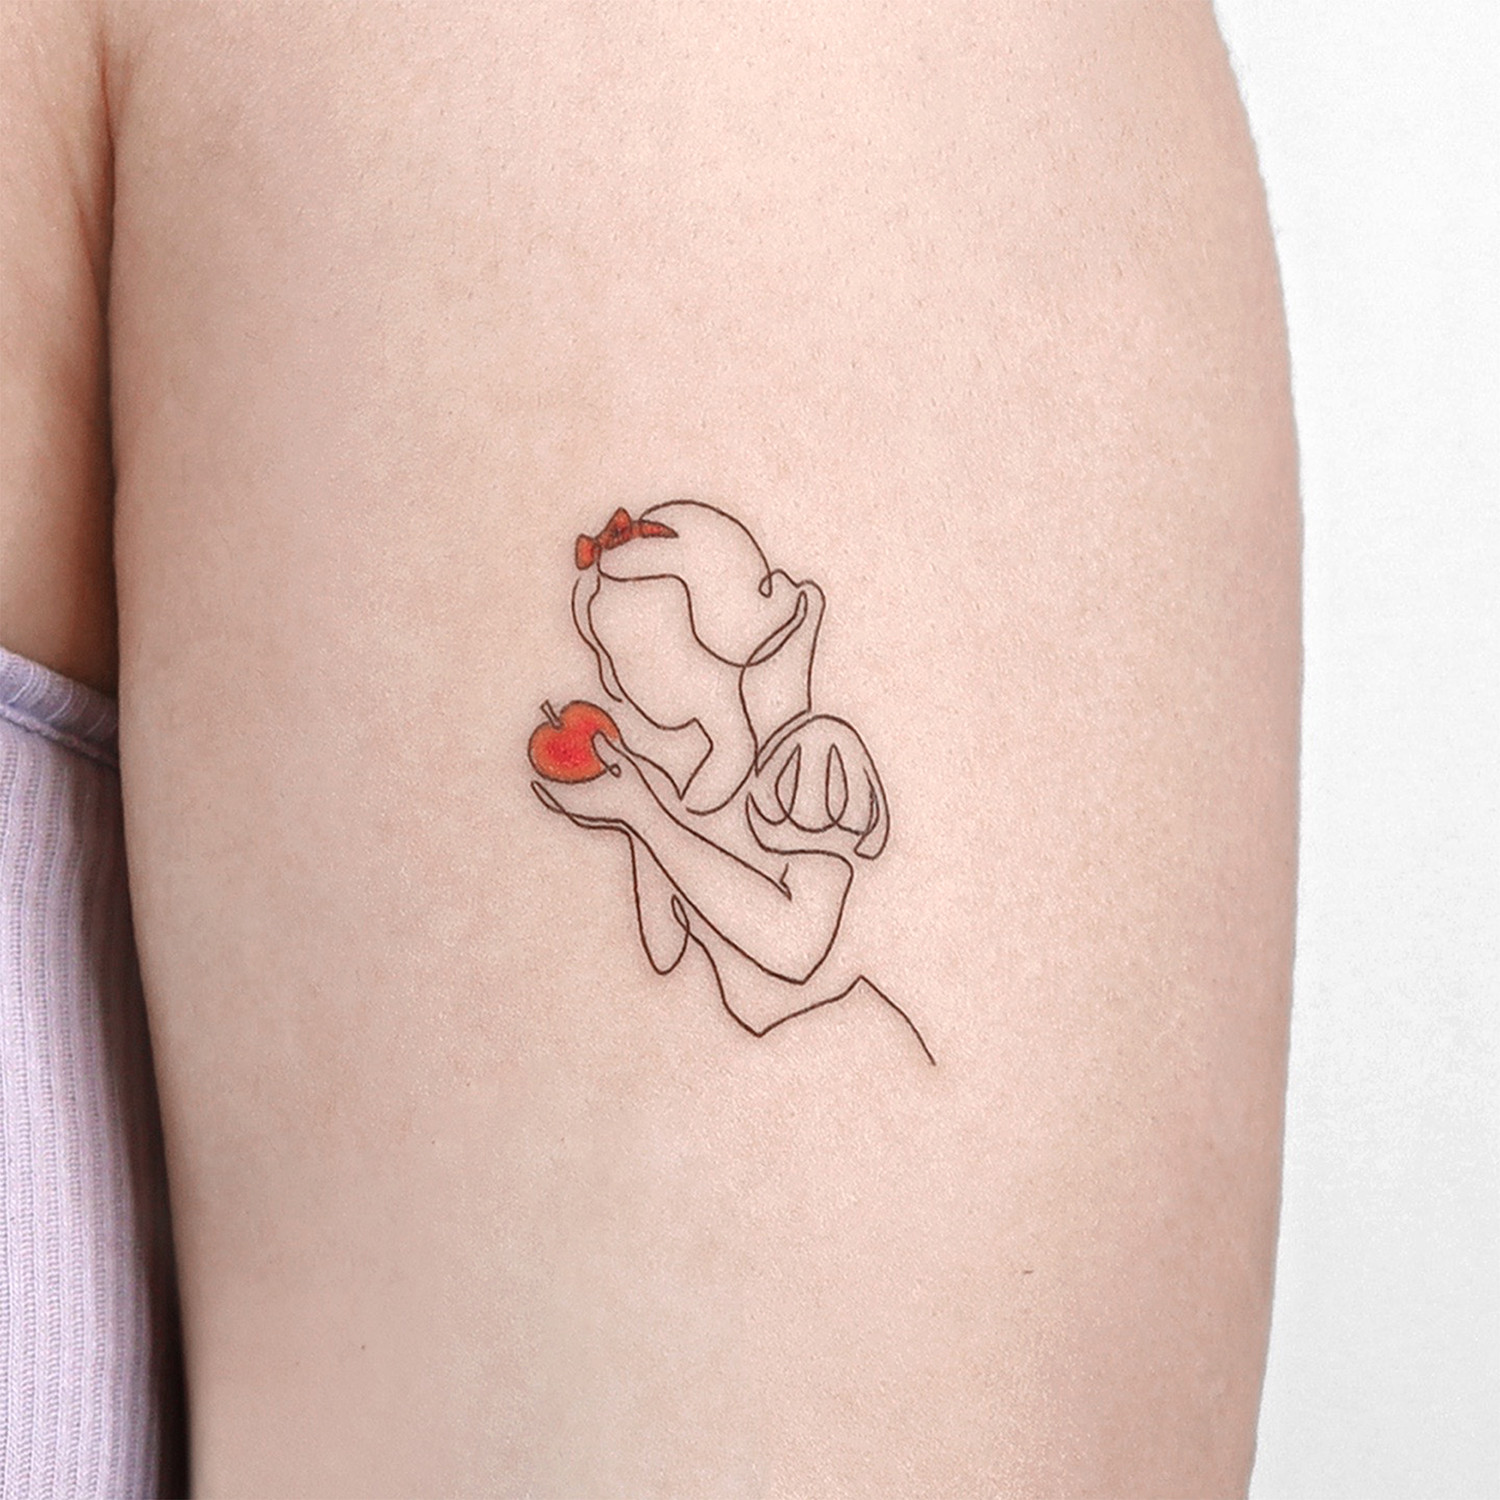 snow white in stylized line art tattoo